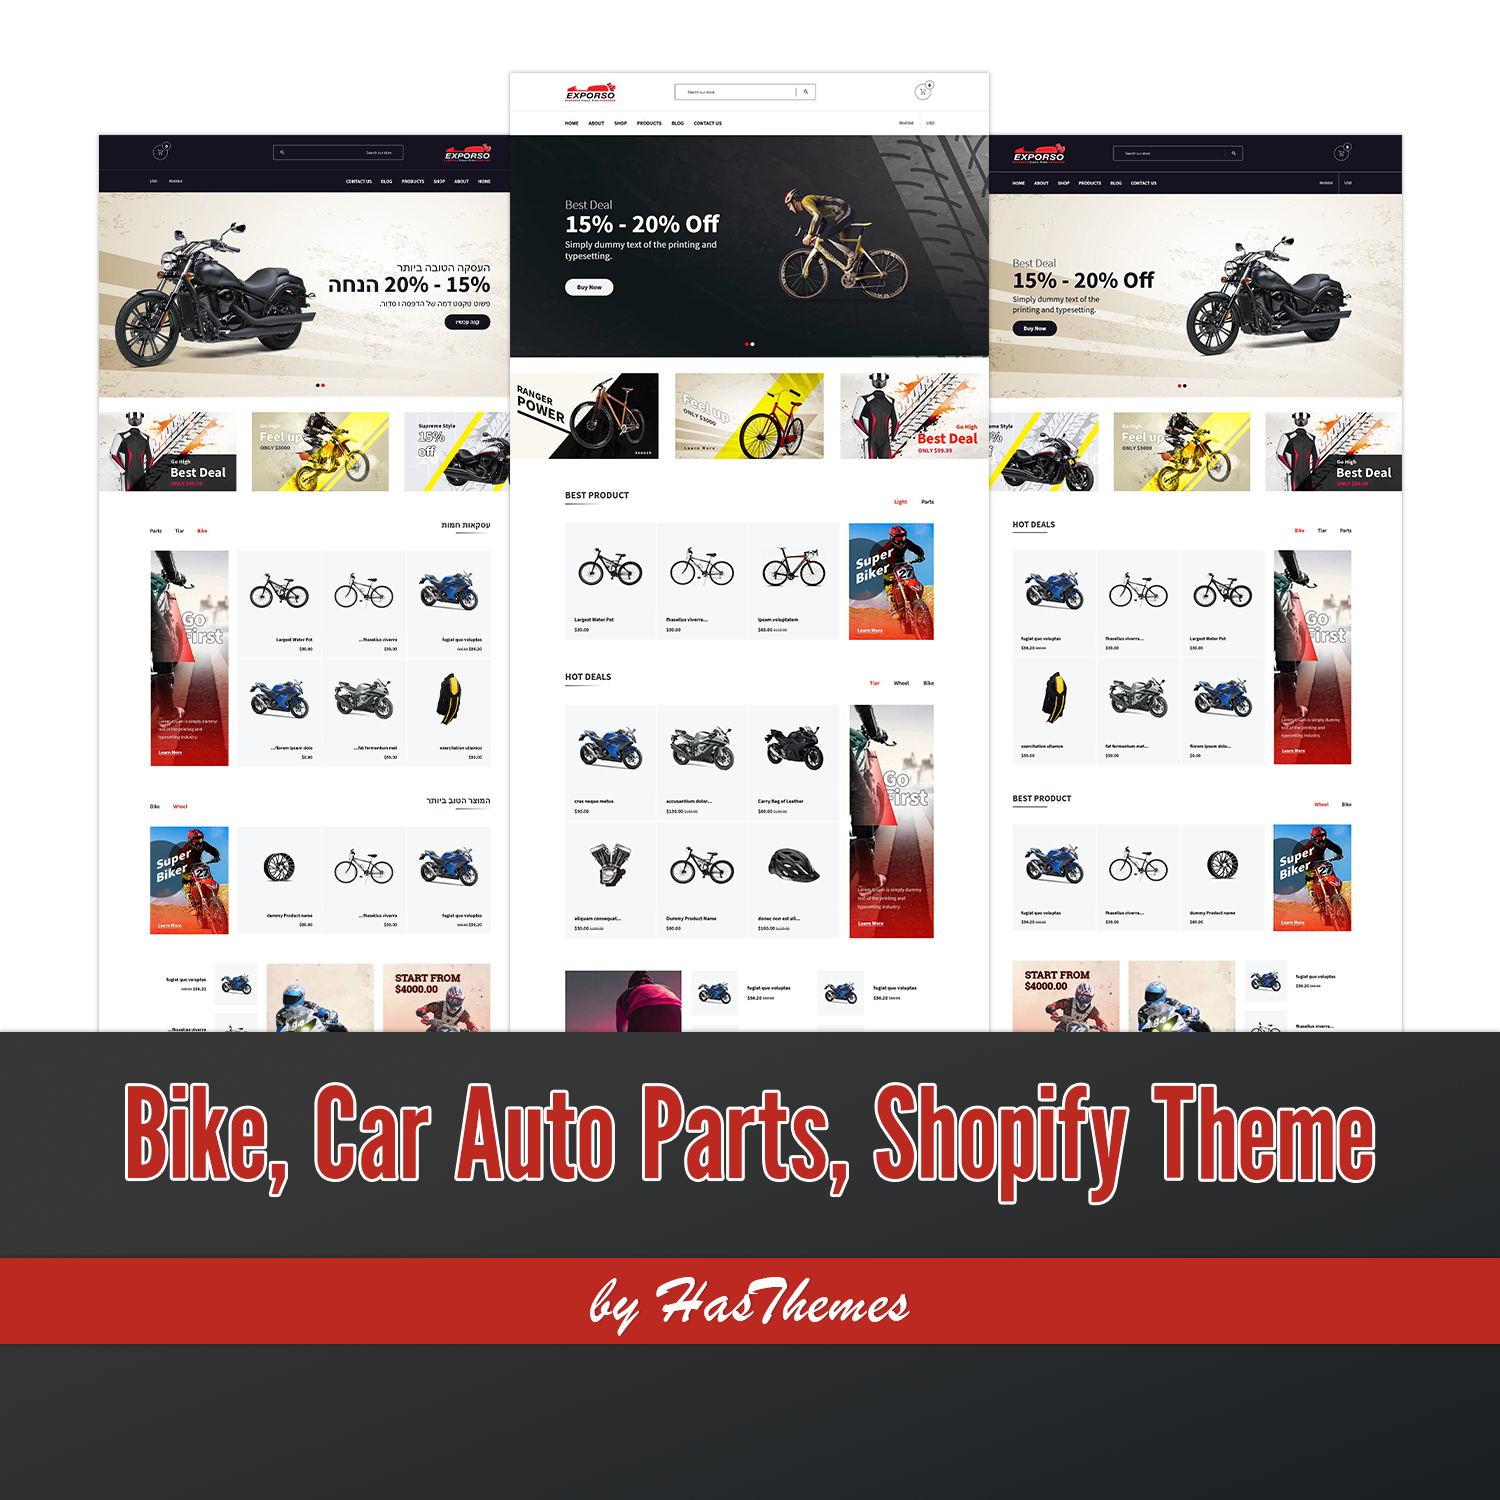 Illustration bike car auto parts shopify theme.